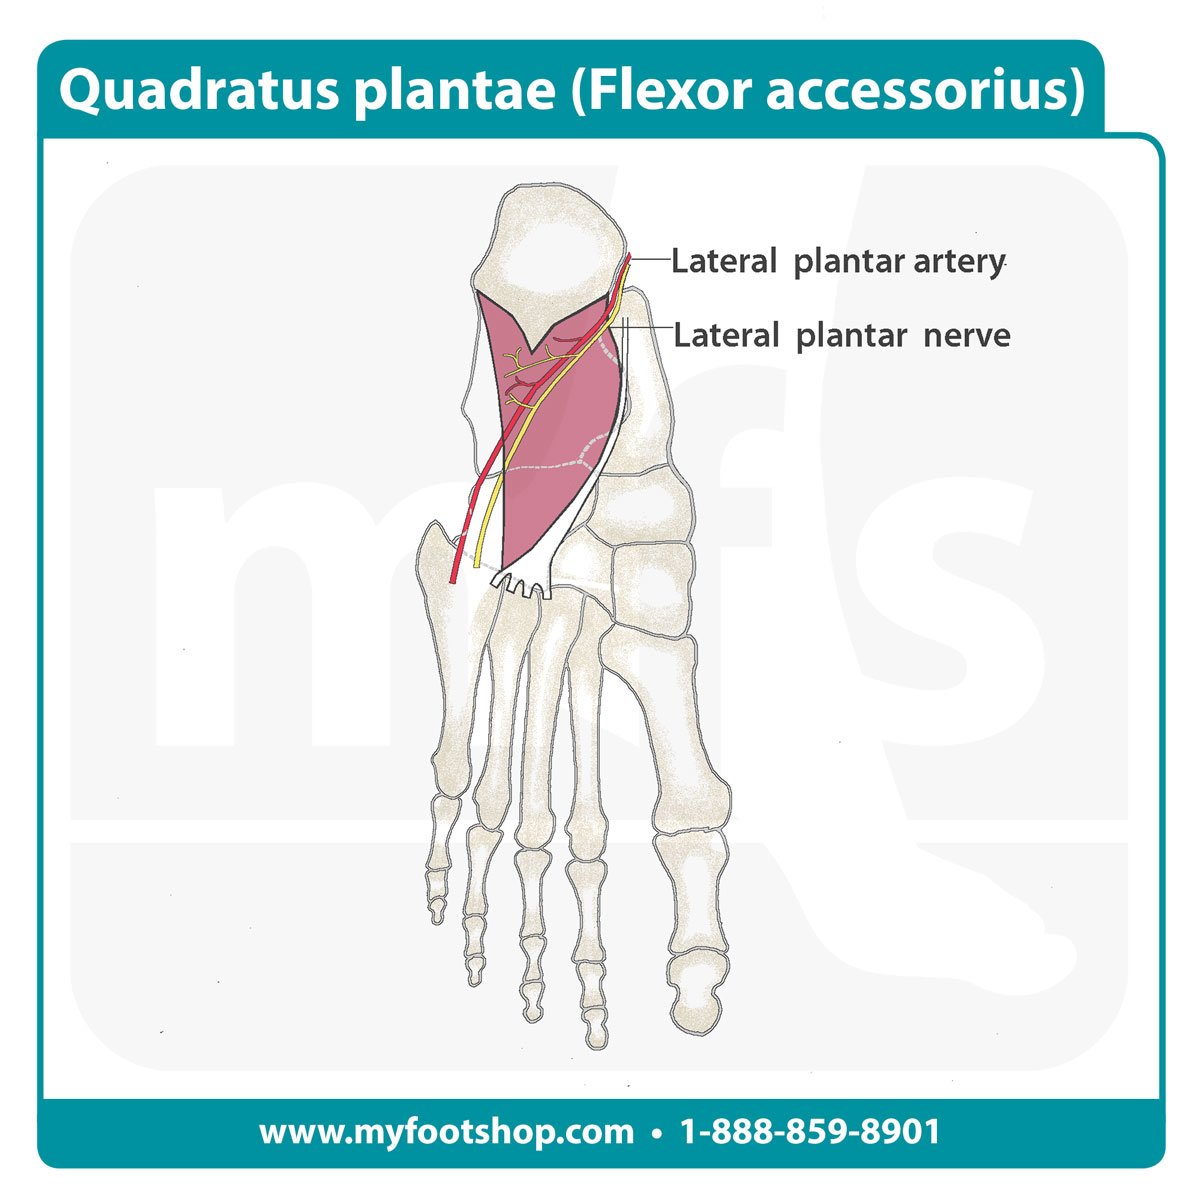 Image of the quadratus plantae muscle of the foot